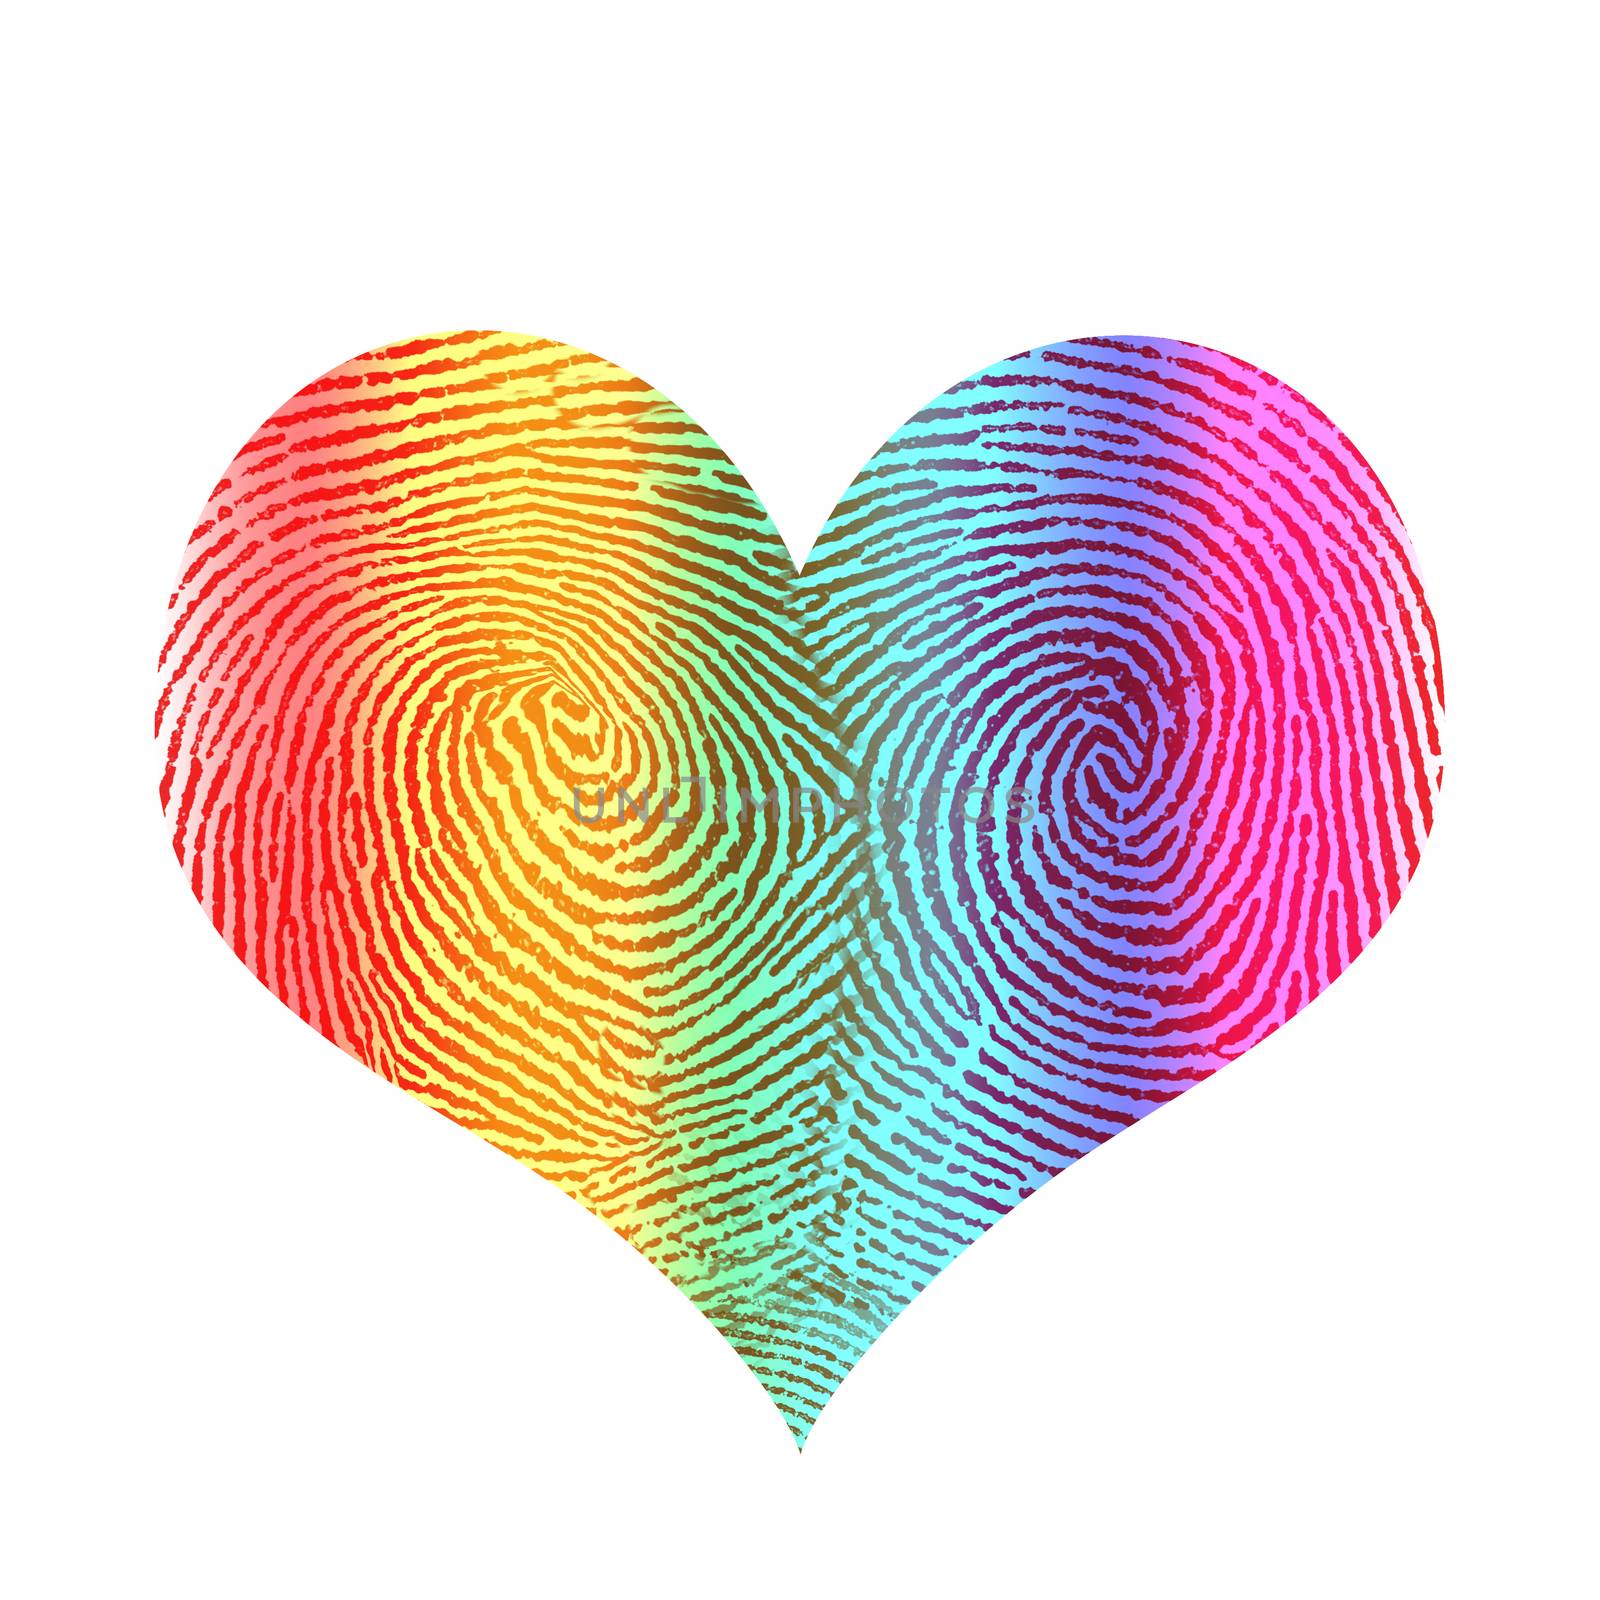 Fingerprint in shape of rainbow heart. 